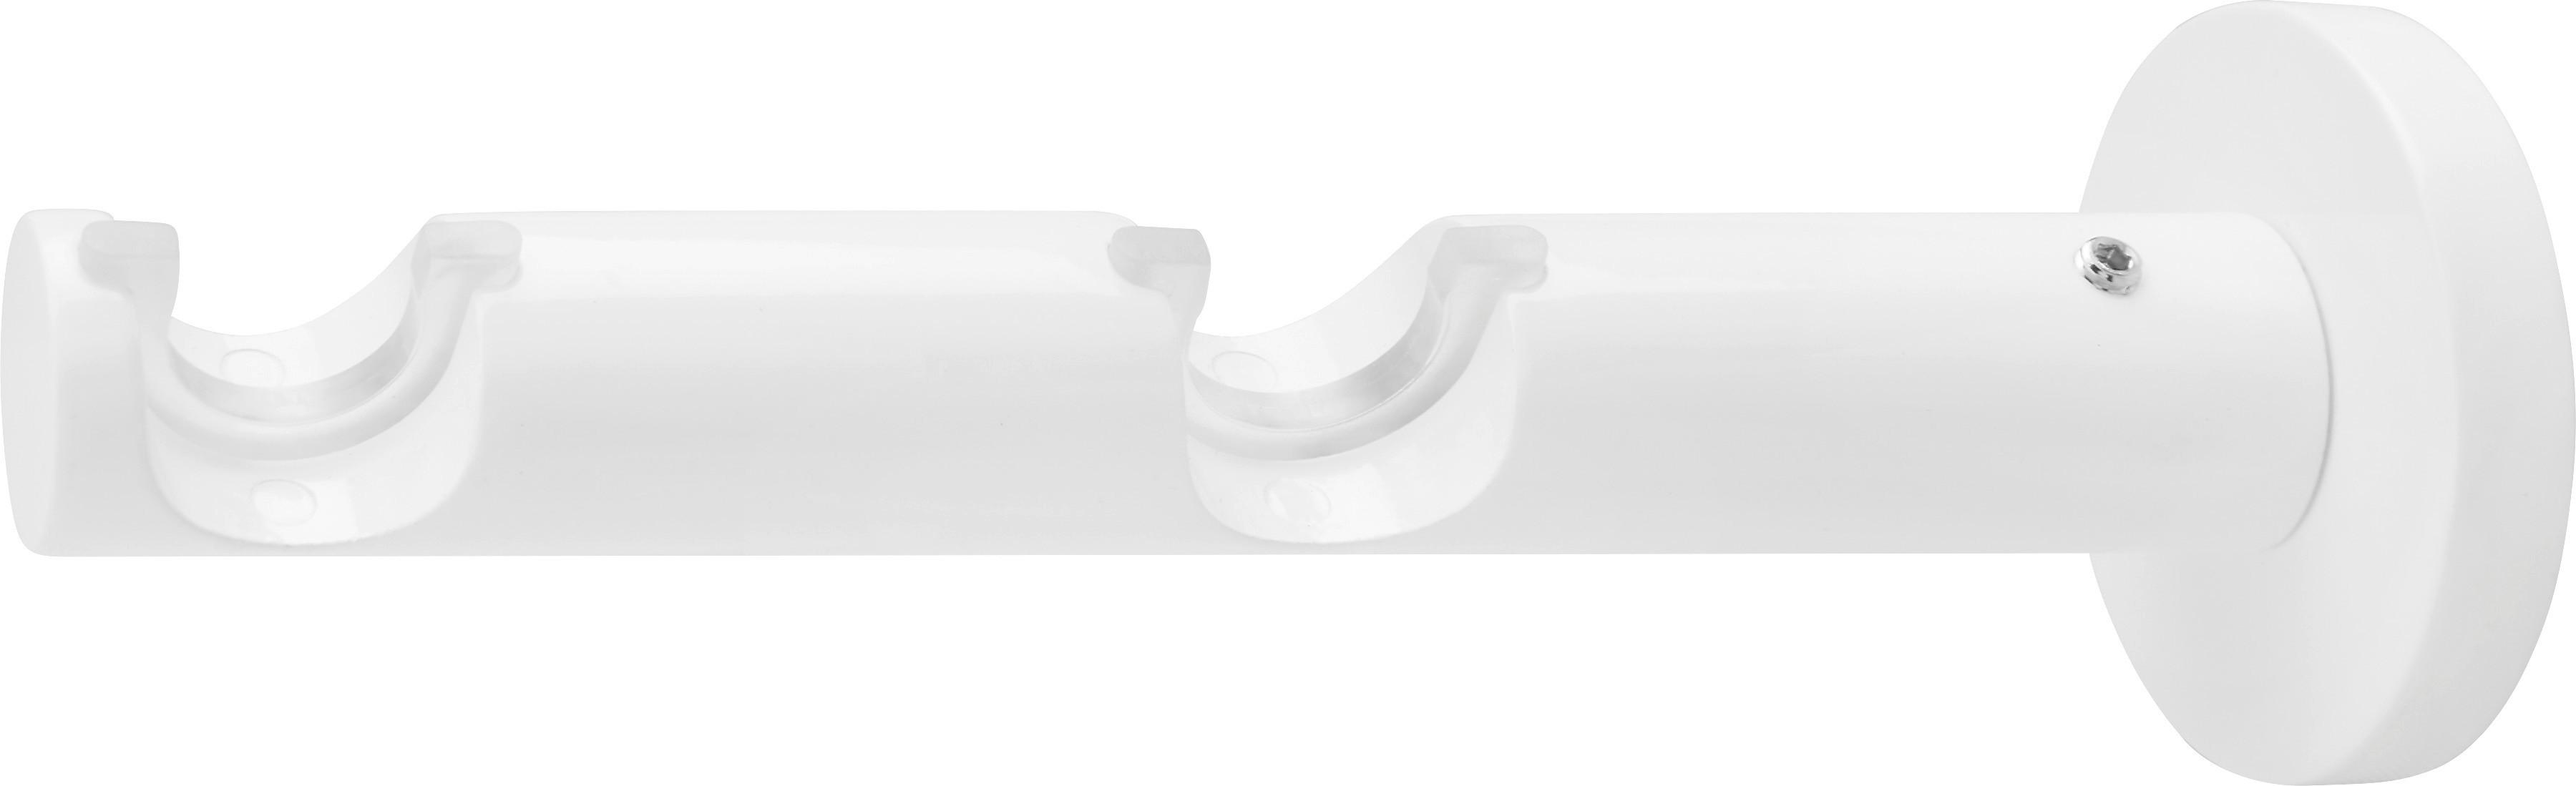 Träger Rillcube in Weiß ca. 15cm - Weiß, Metall (15cm) - Modern Living